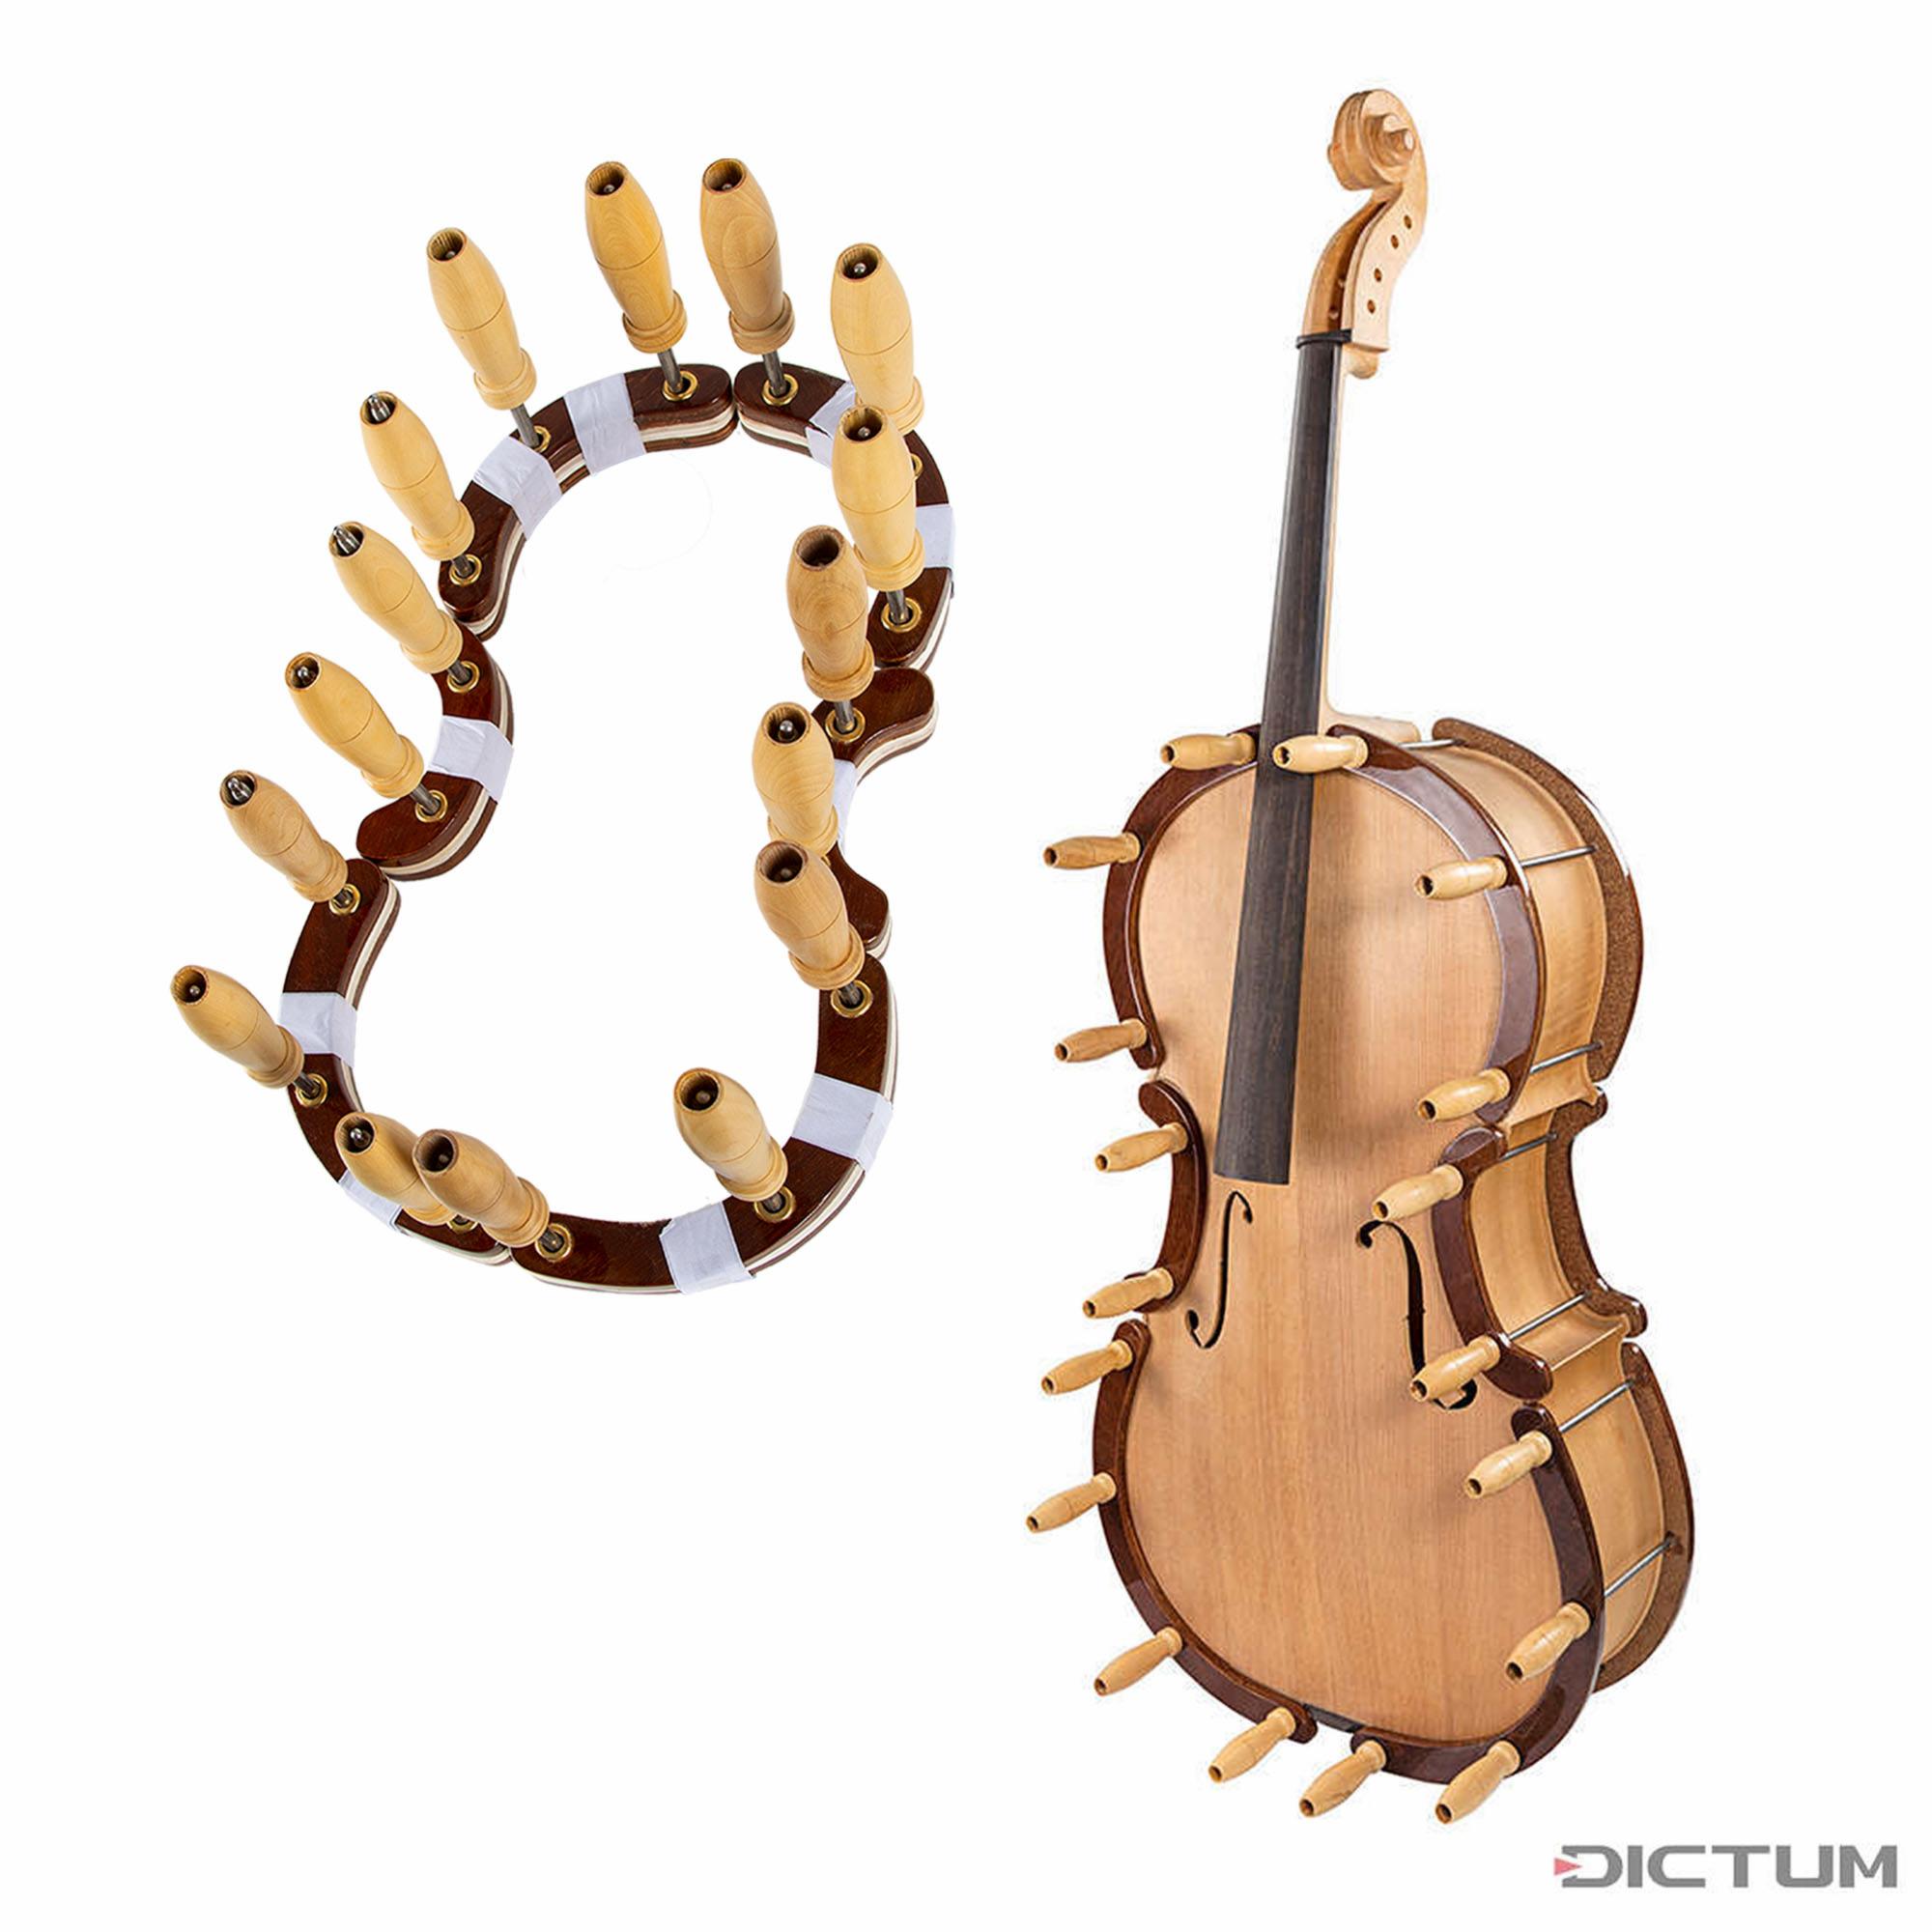 Dictum Clamp for Violin/Viola or Cello | Southwest Strings